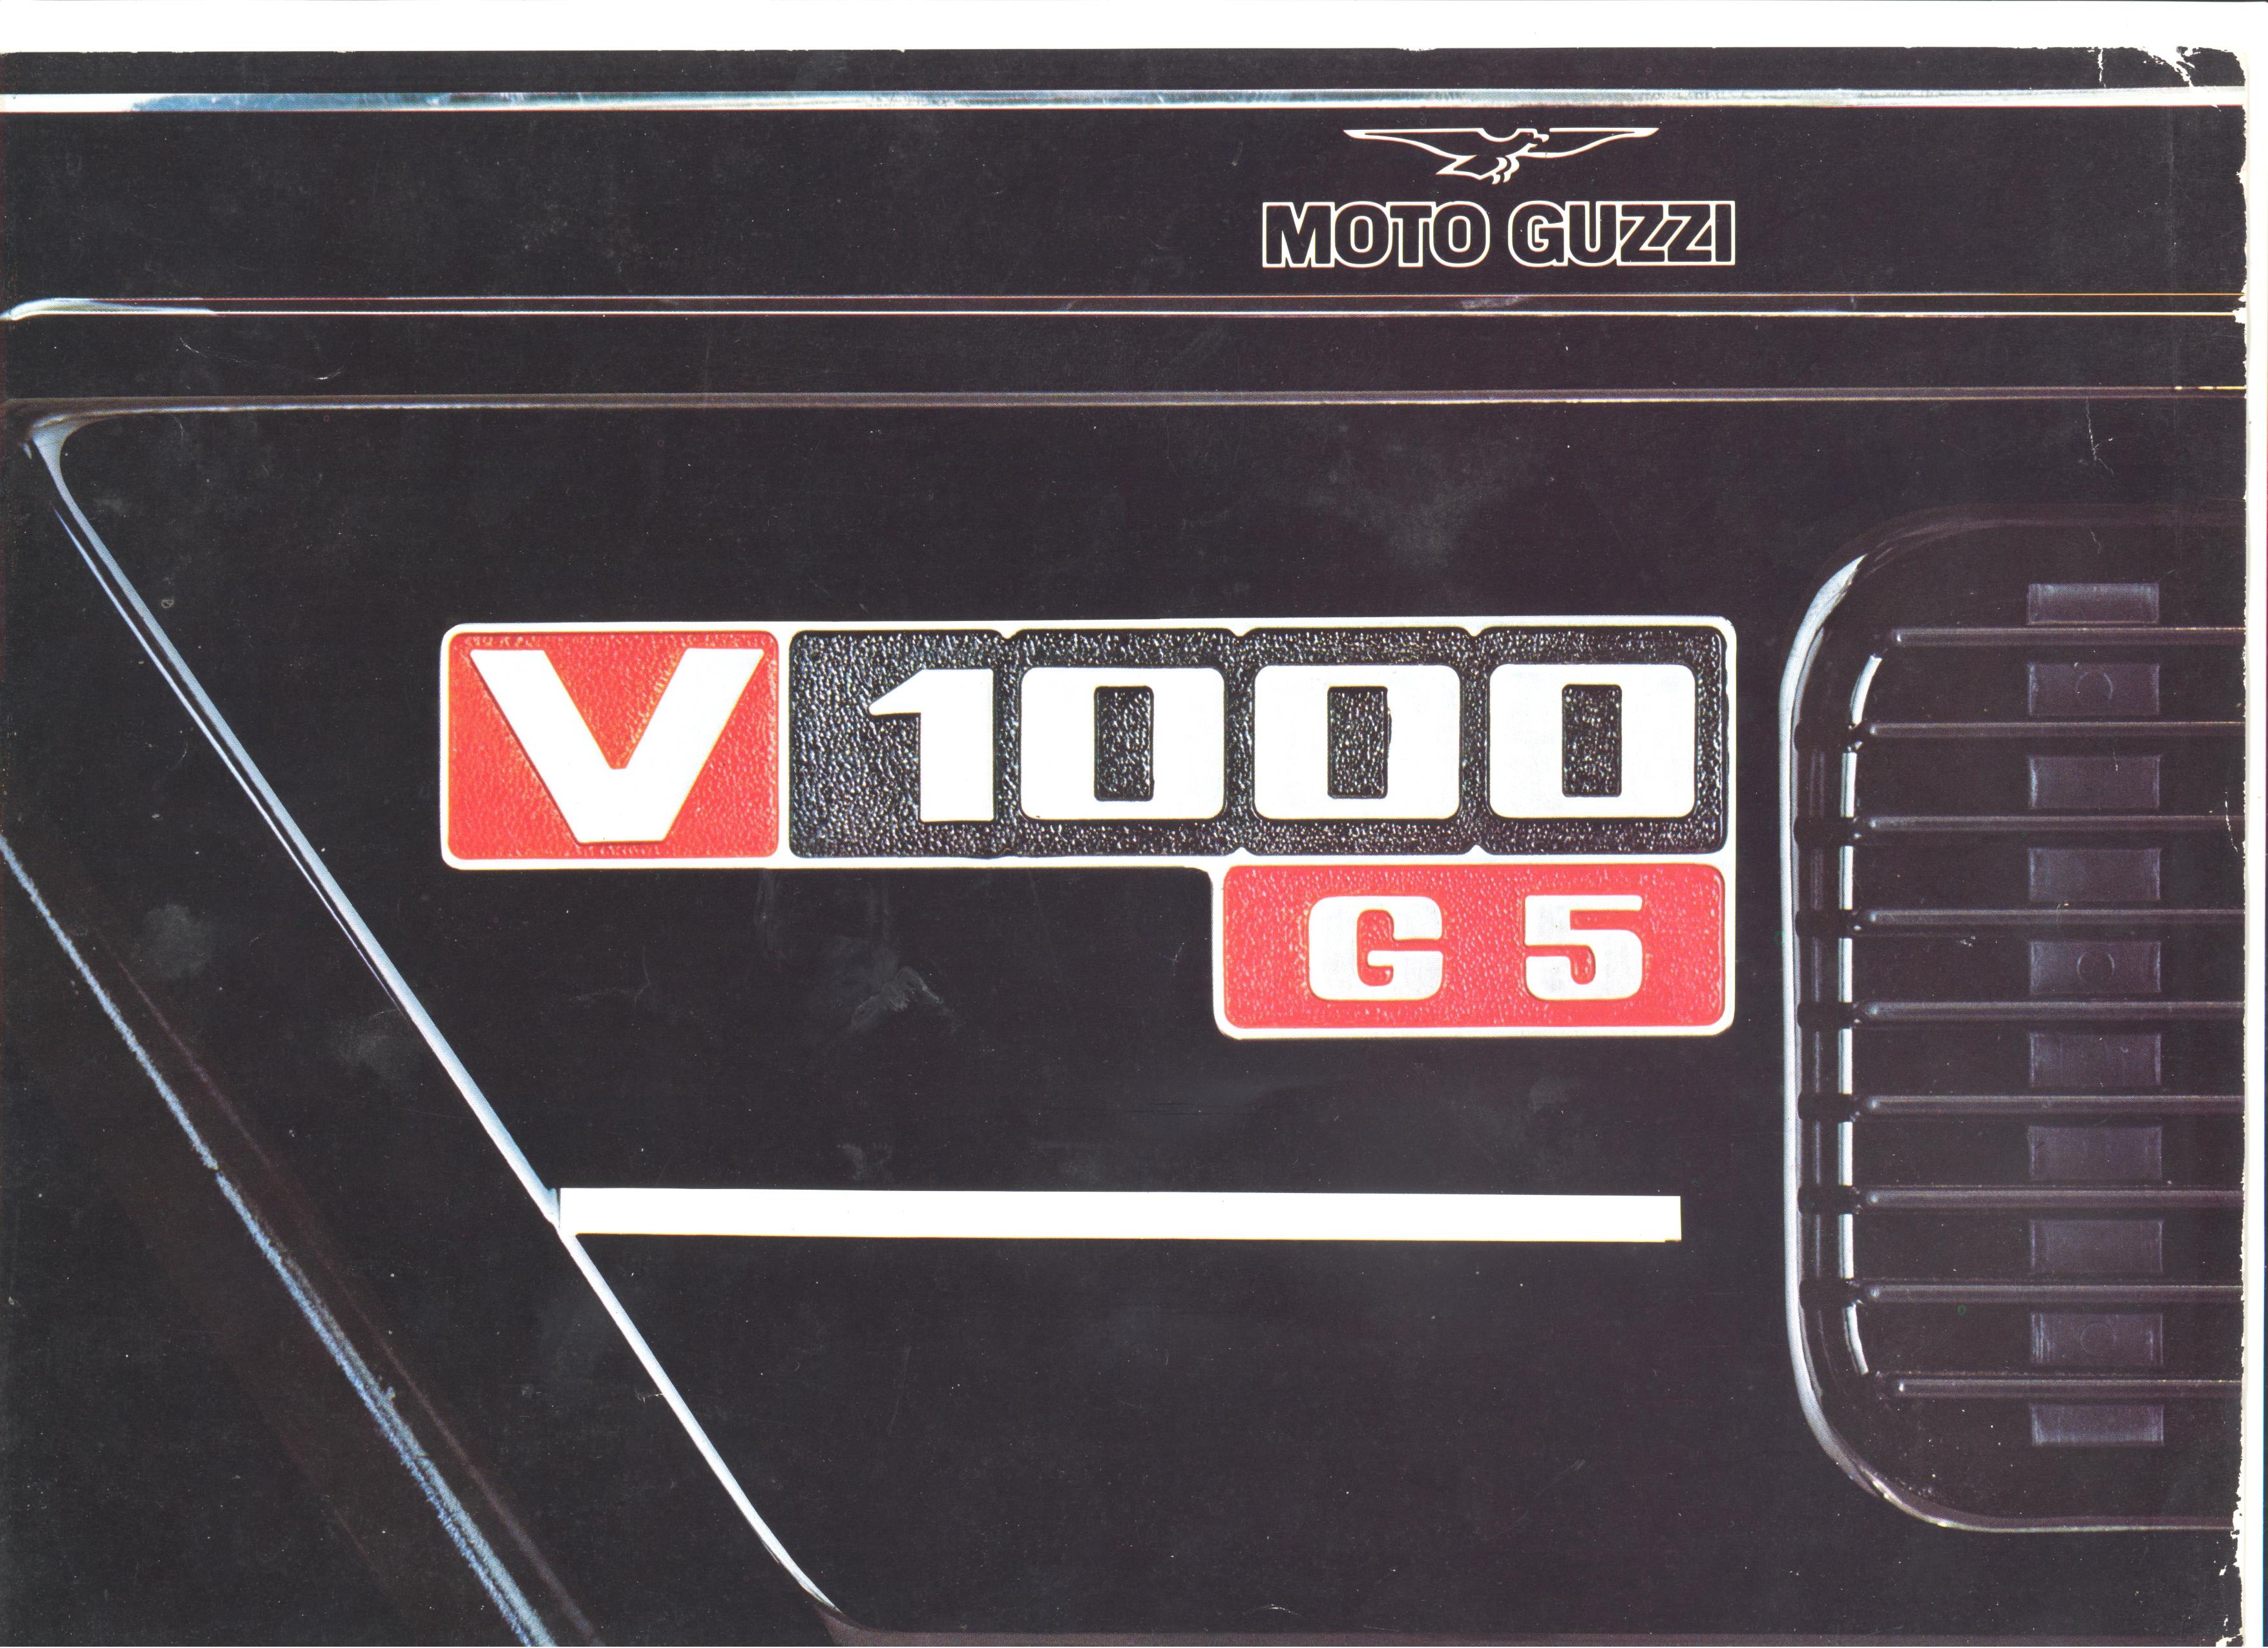 Moto Guzzi factory brochure: V1000 G5